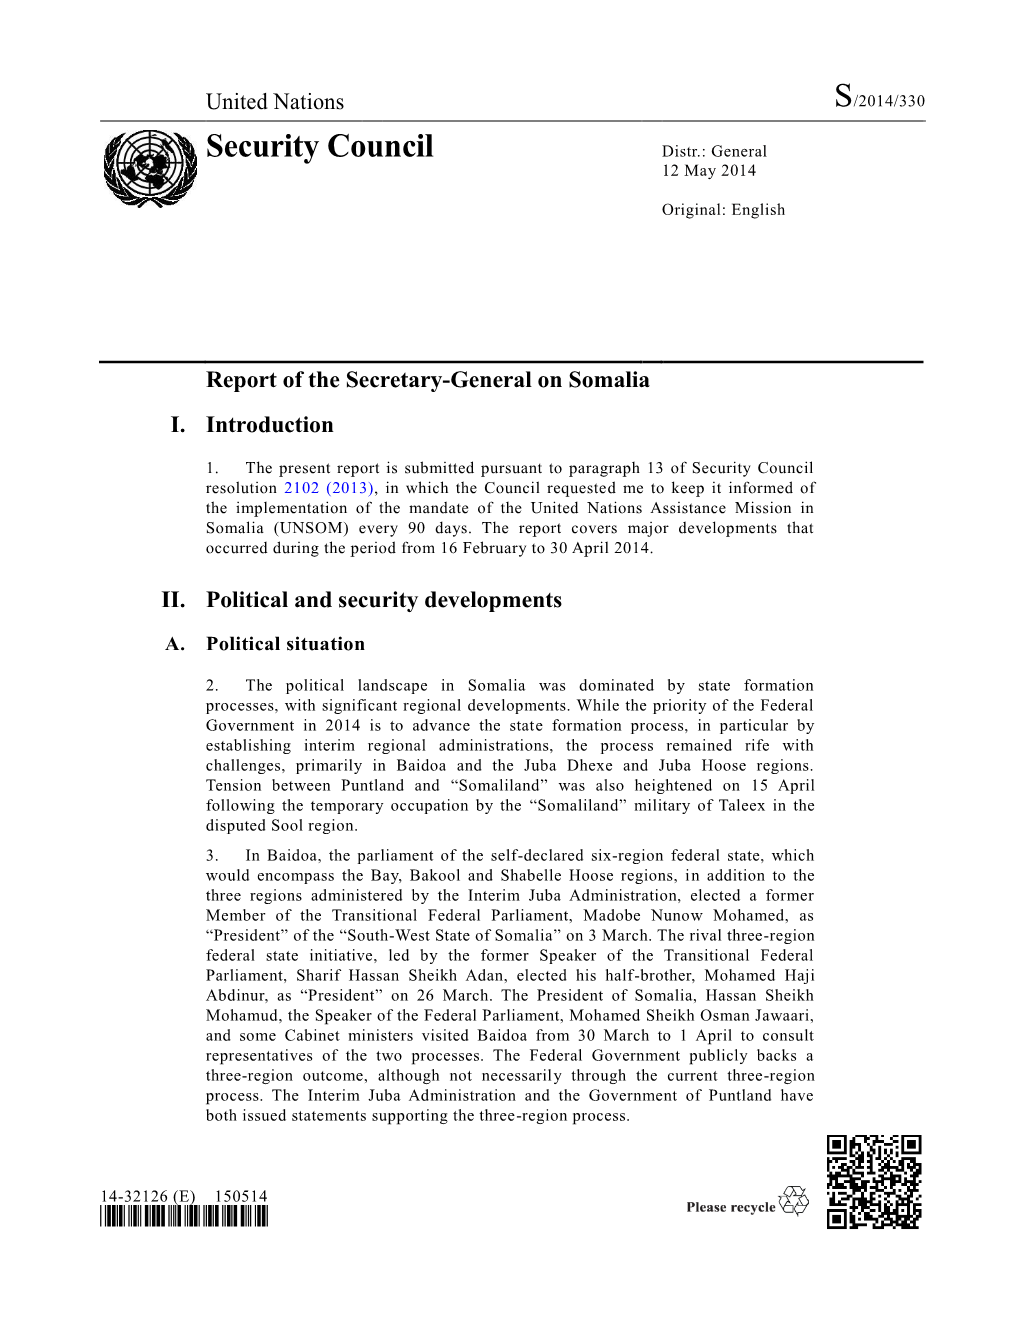 Security Council Distr.: General 12 May 2014